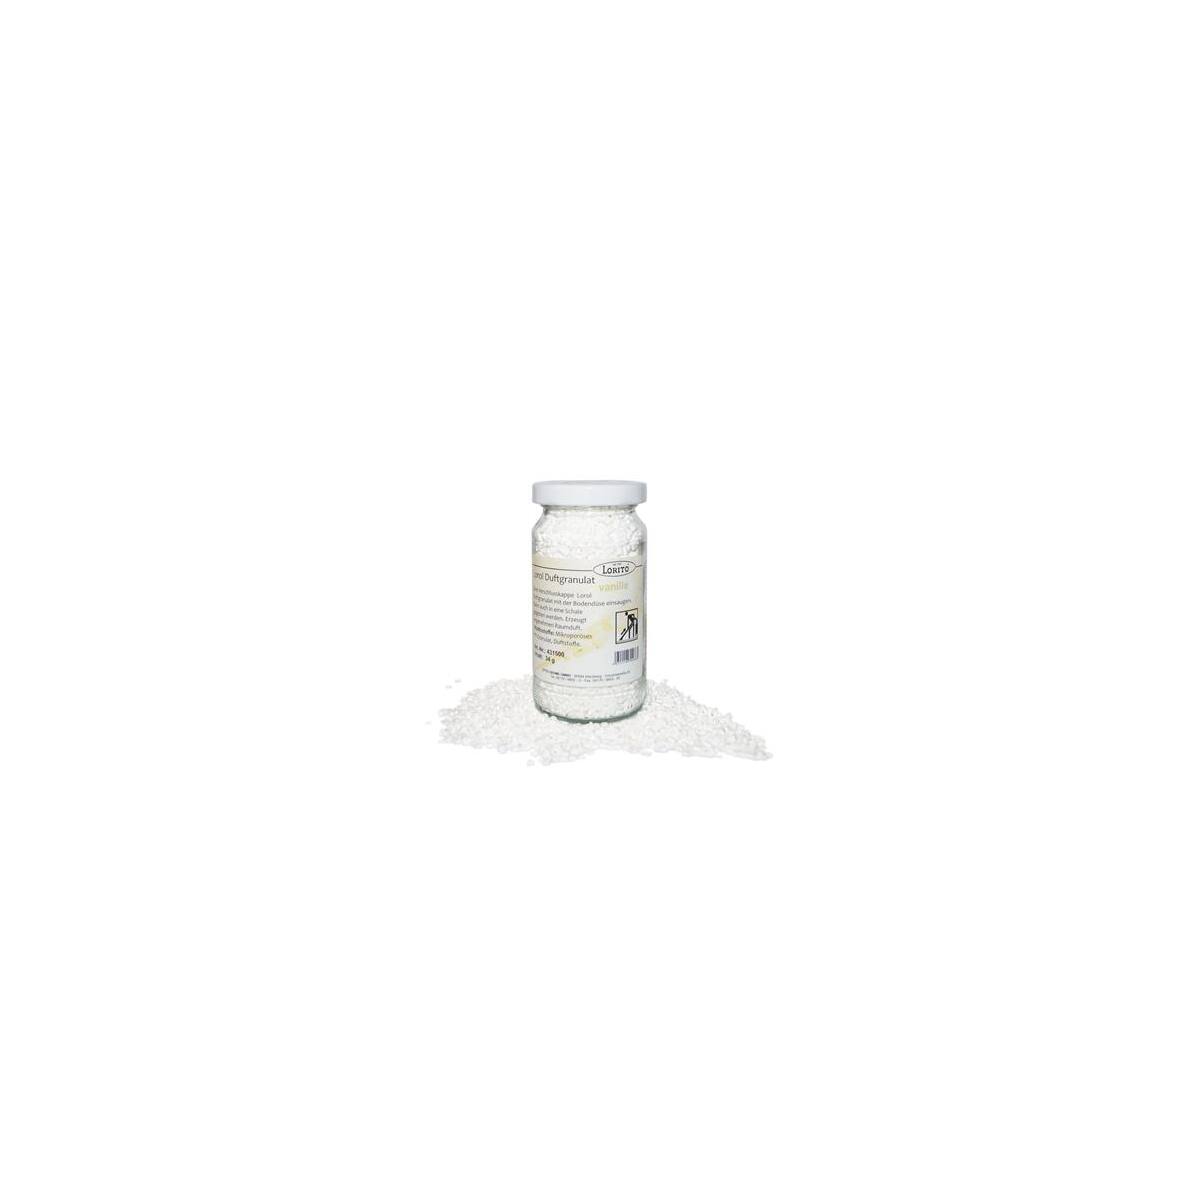 Lorol Duftgranulat Vanille 34 g - 200 ml Staubsaugerduft Raumduft